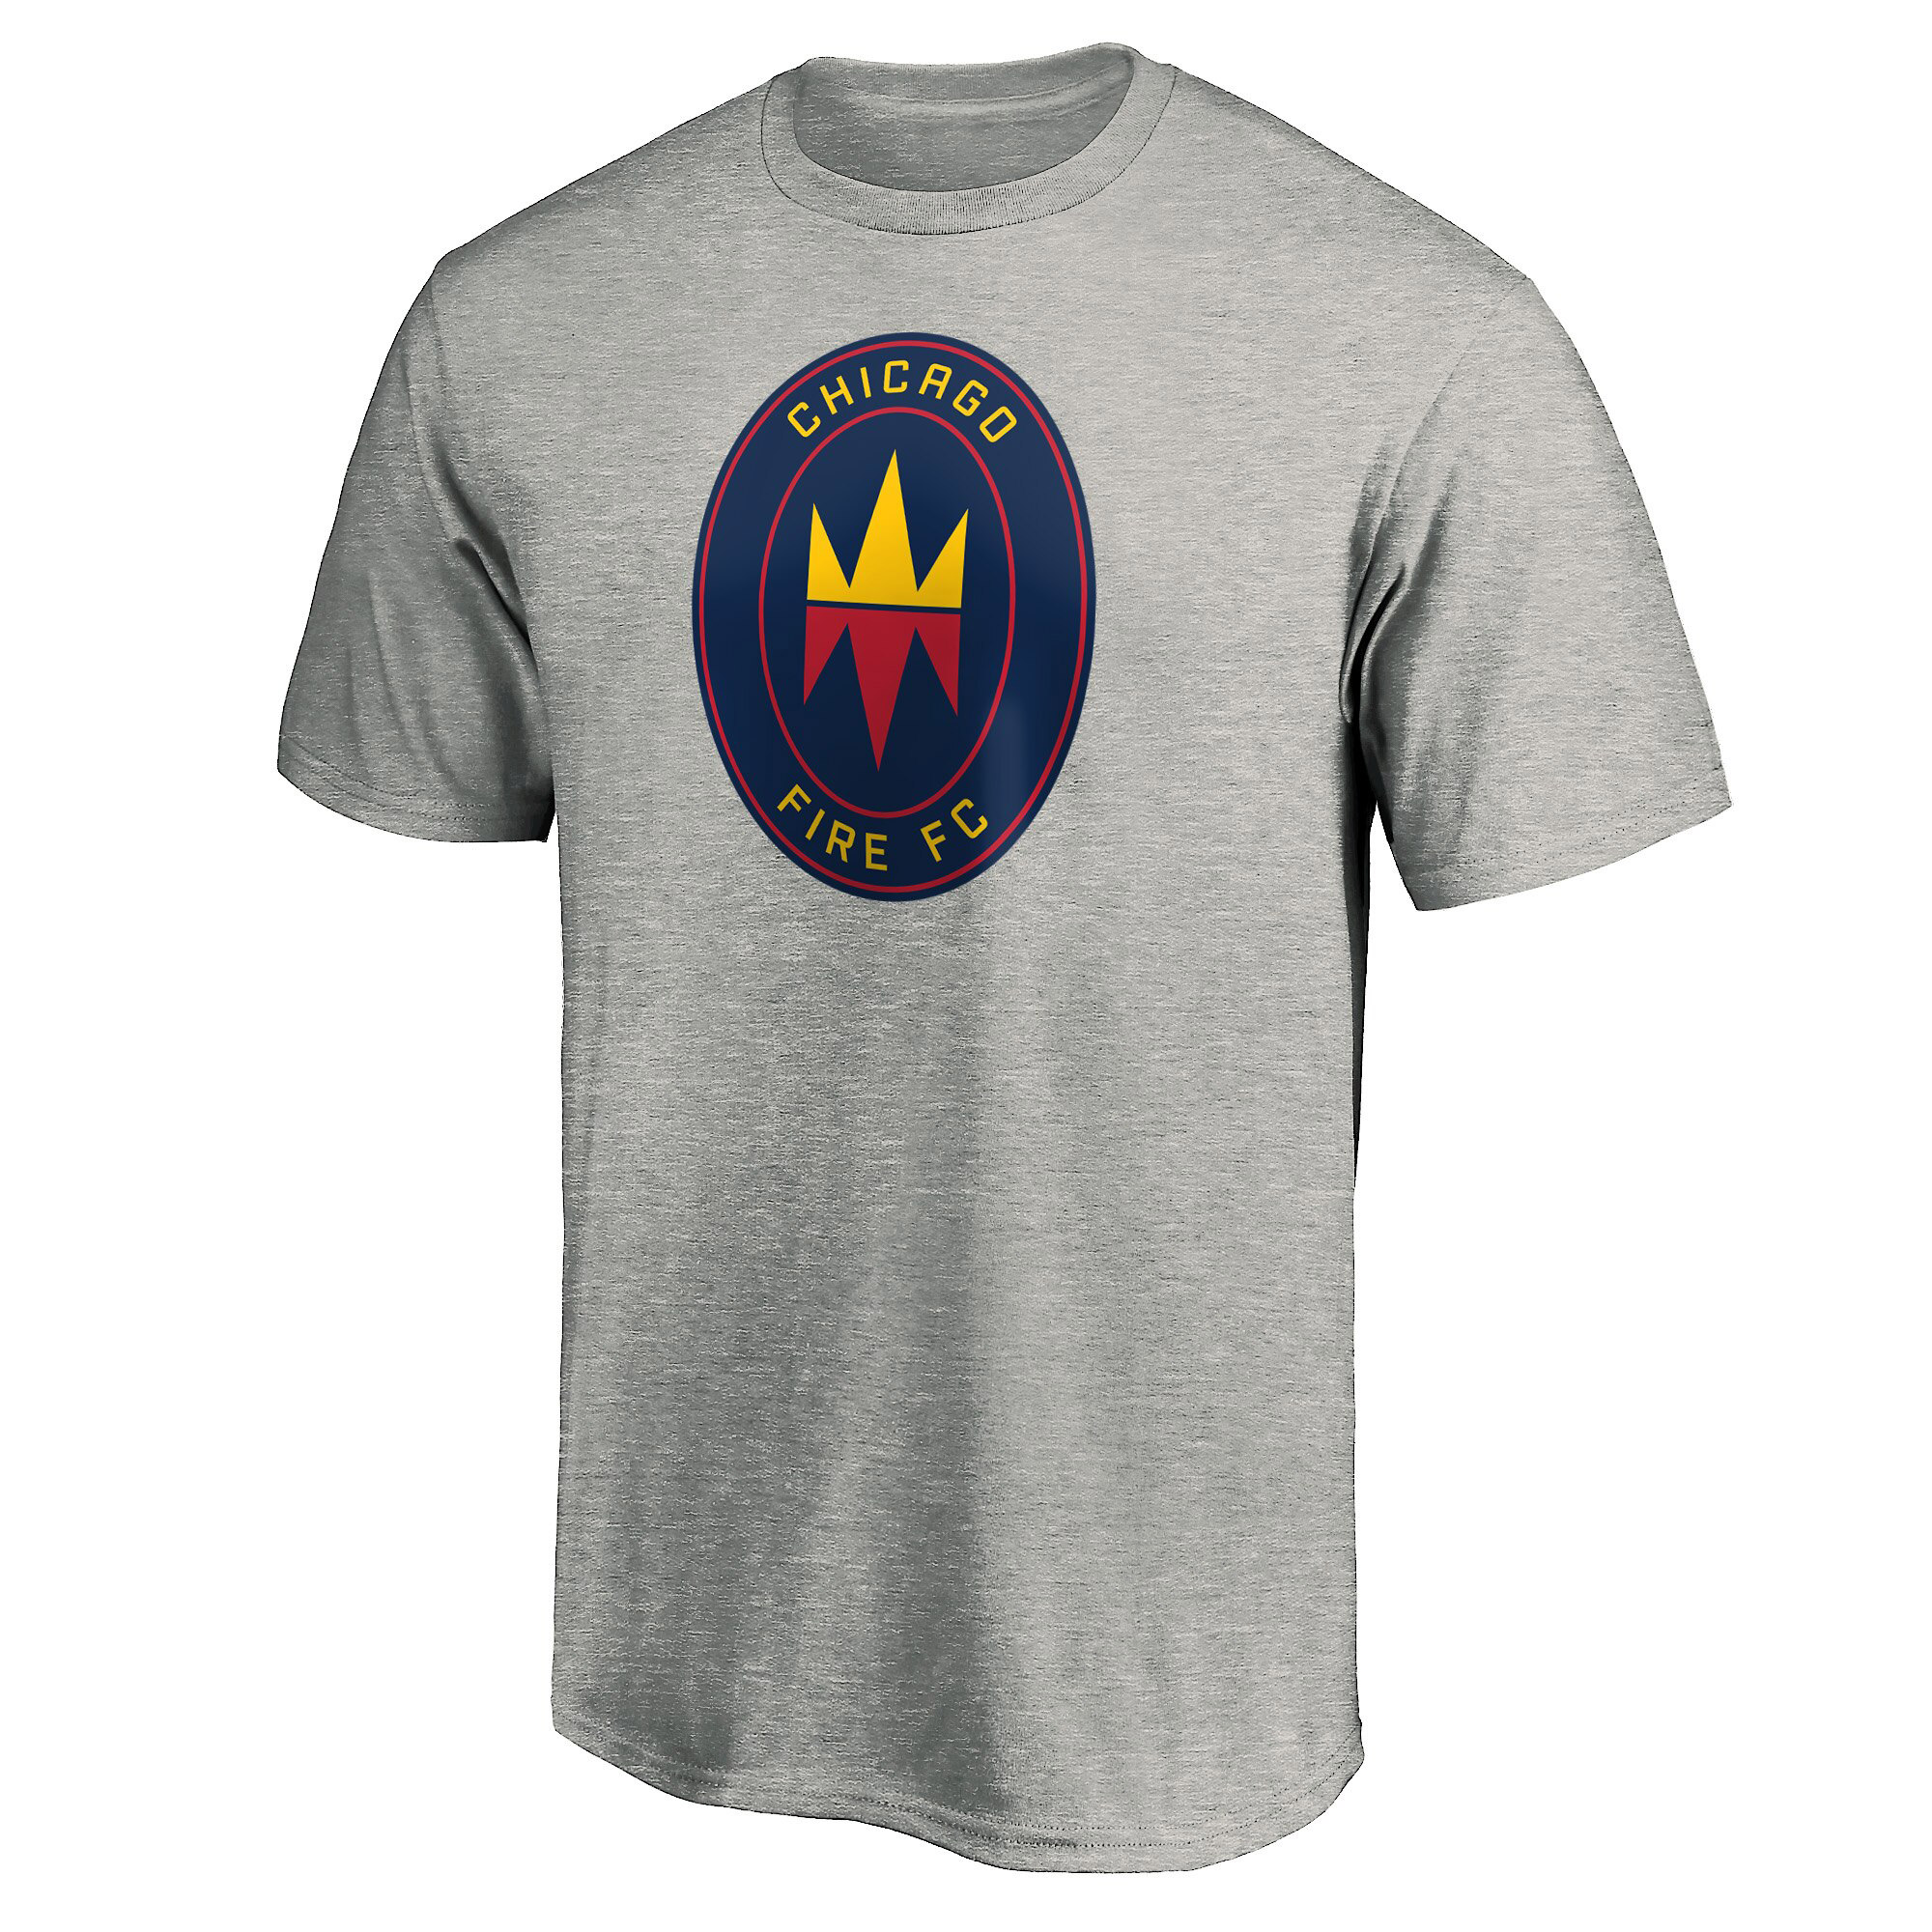 Chicago Fire FC – T-Shirt, Quelle: Chicago Fire FC